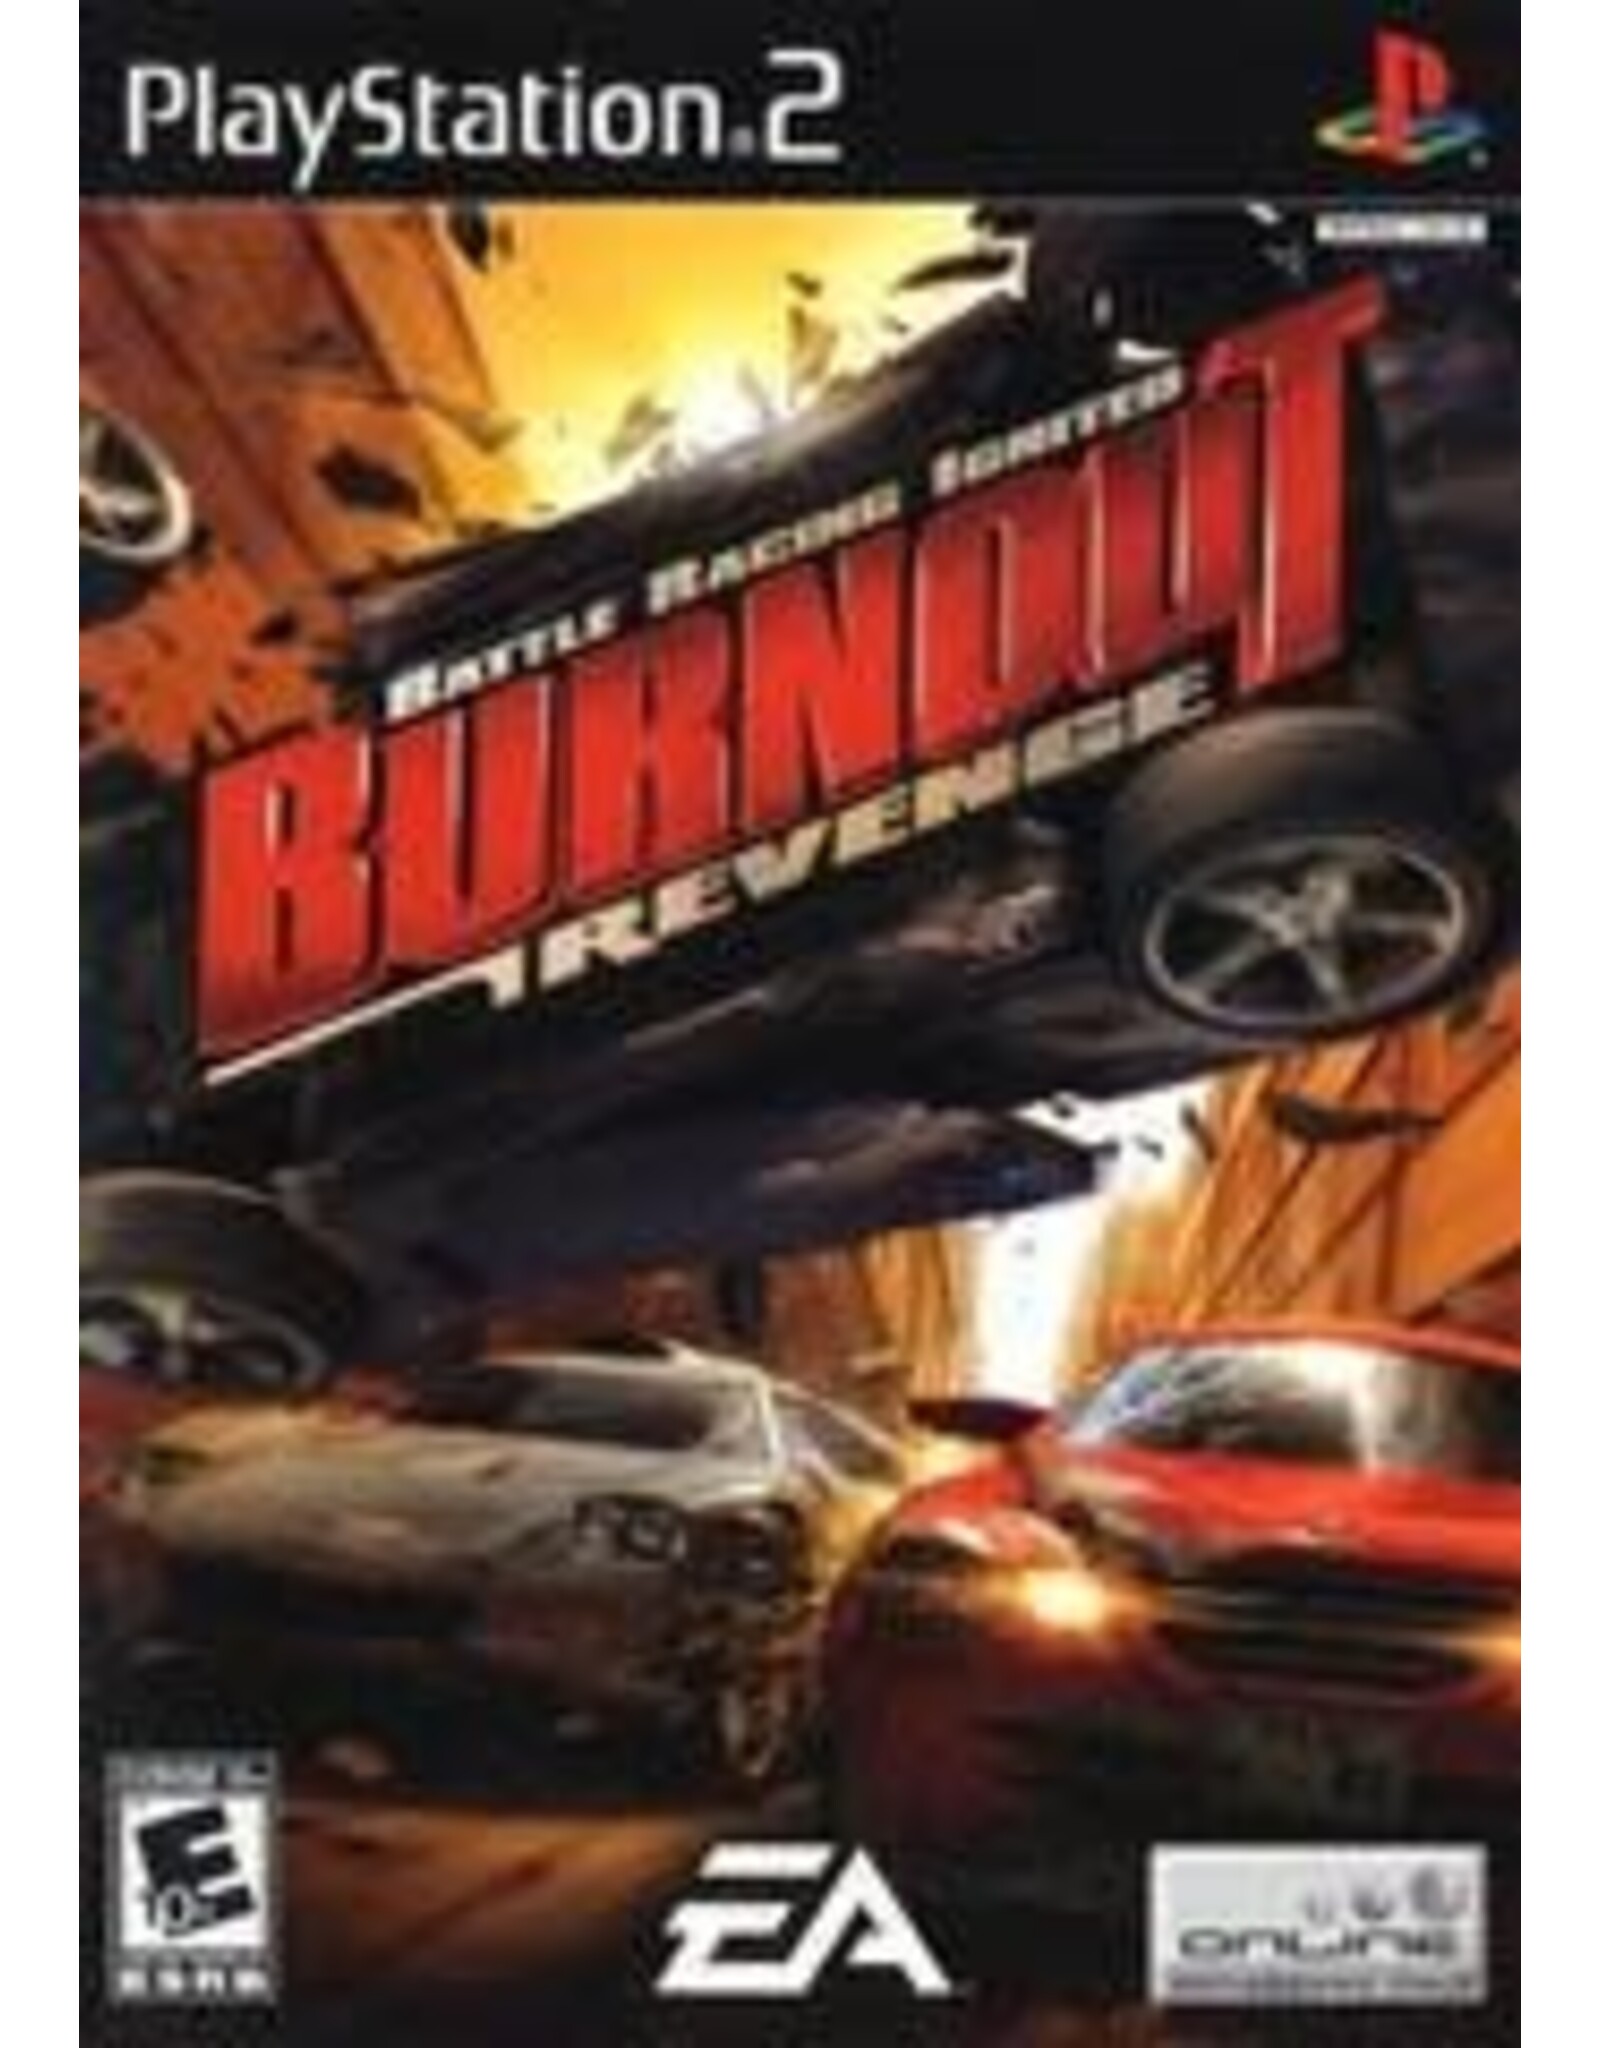 Playstation 2 Burnout Revenge (No Manual)